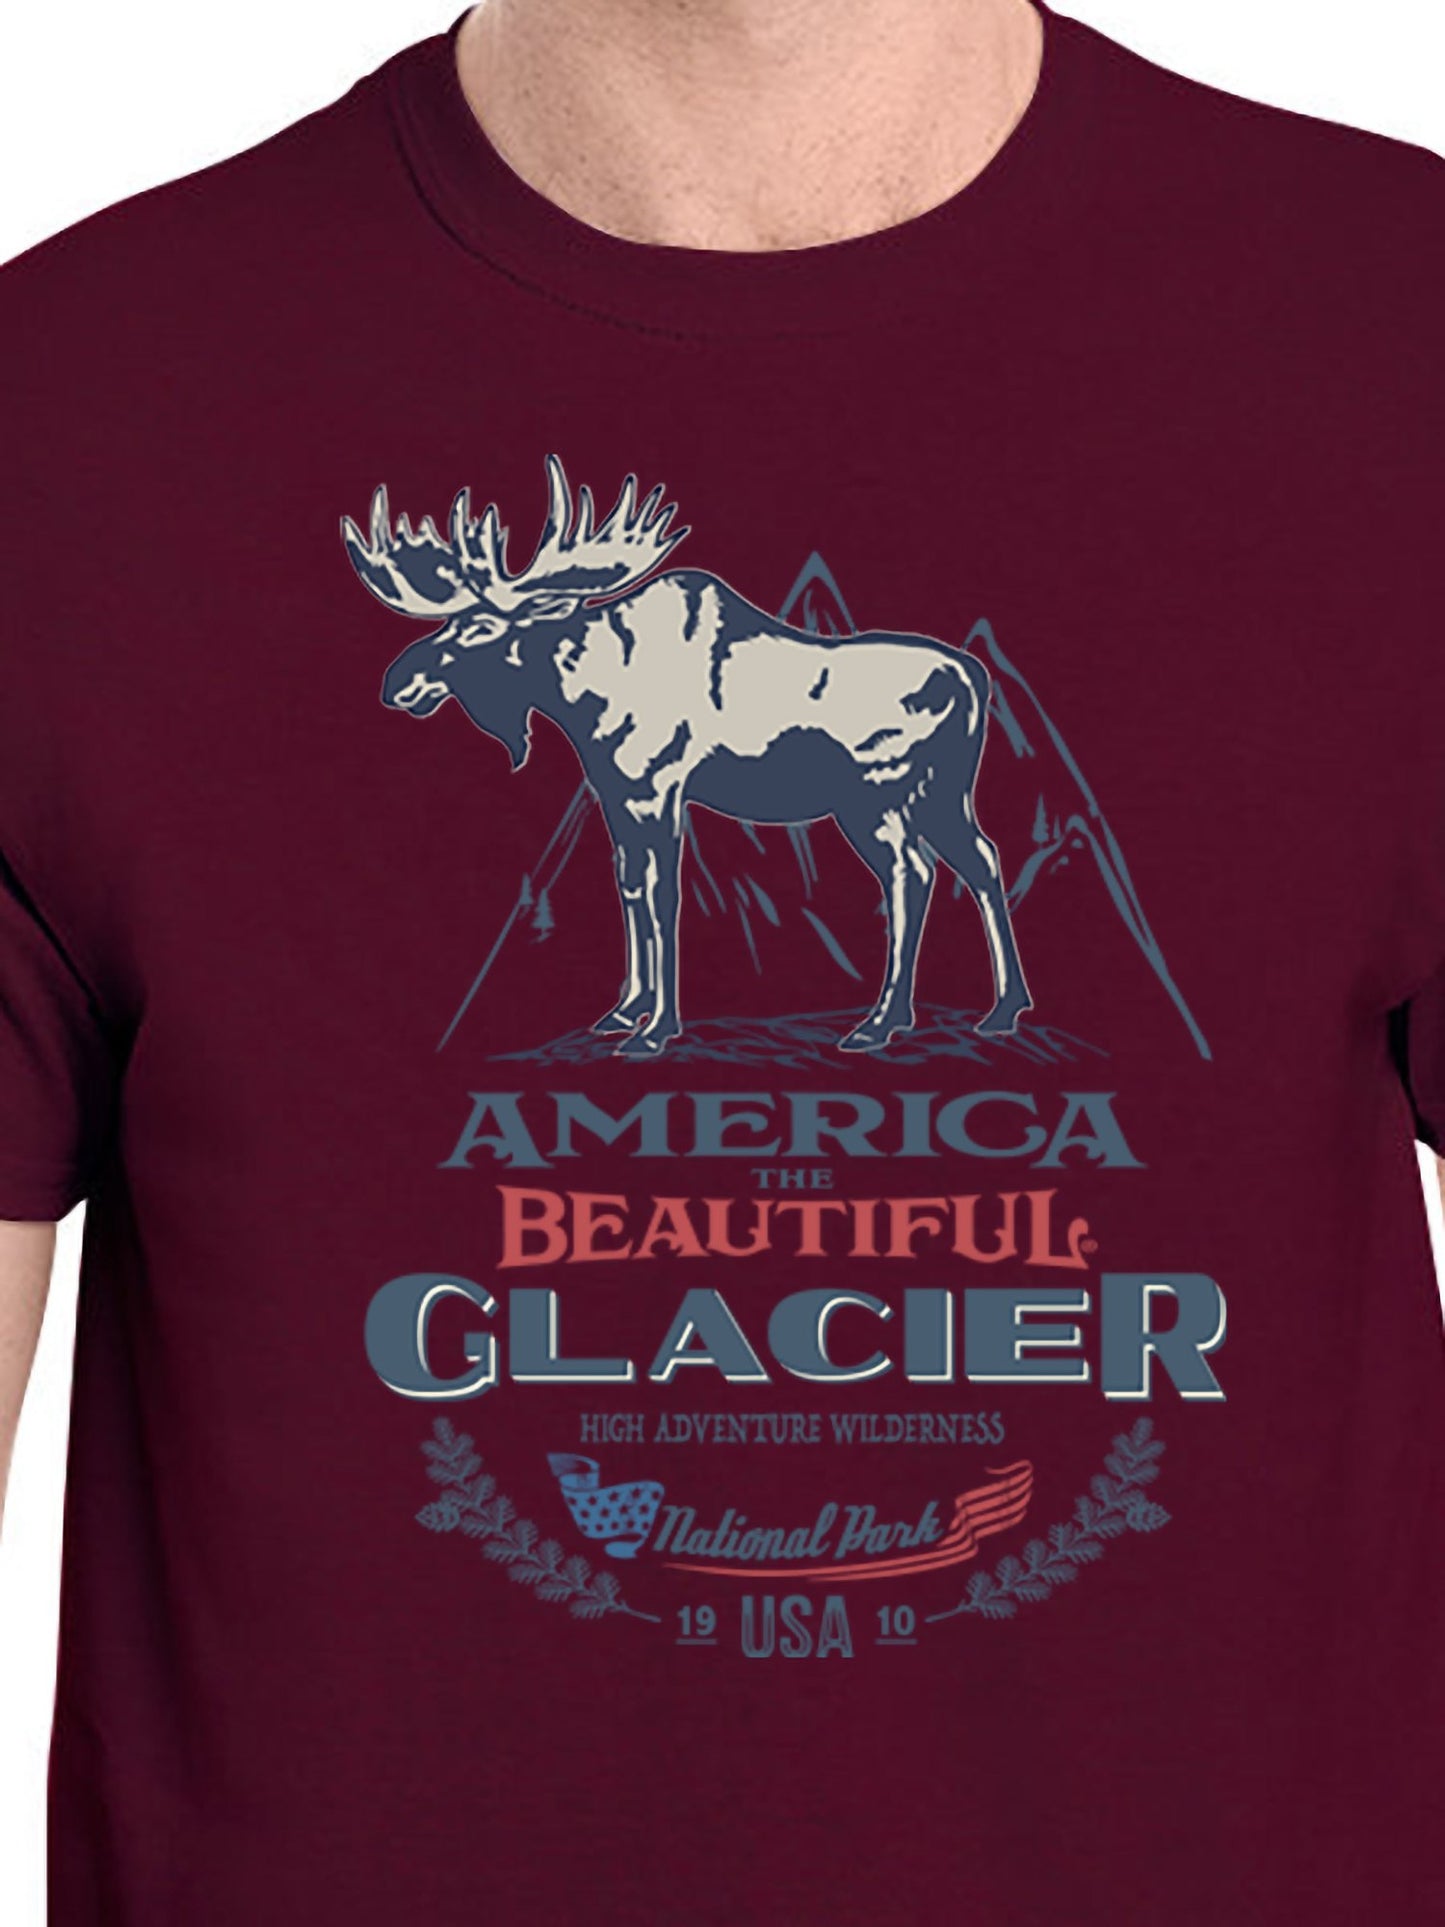 Glacier National Park Bull Moose Vintage Camp-style Graphic T-shirt